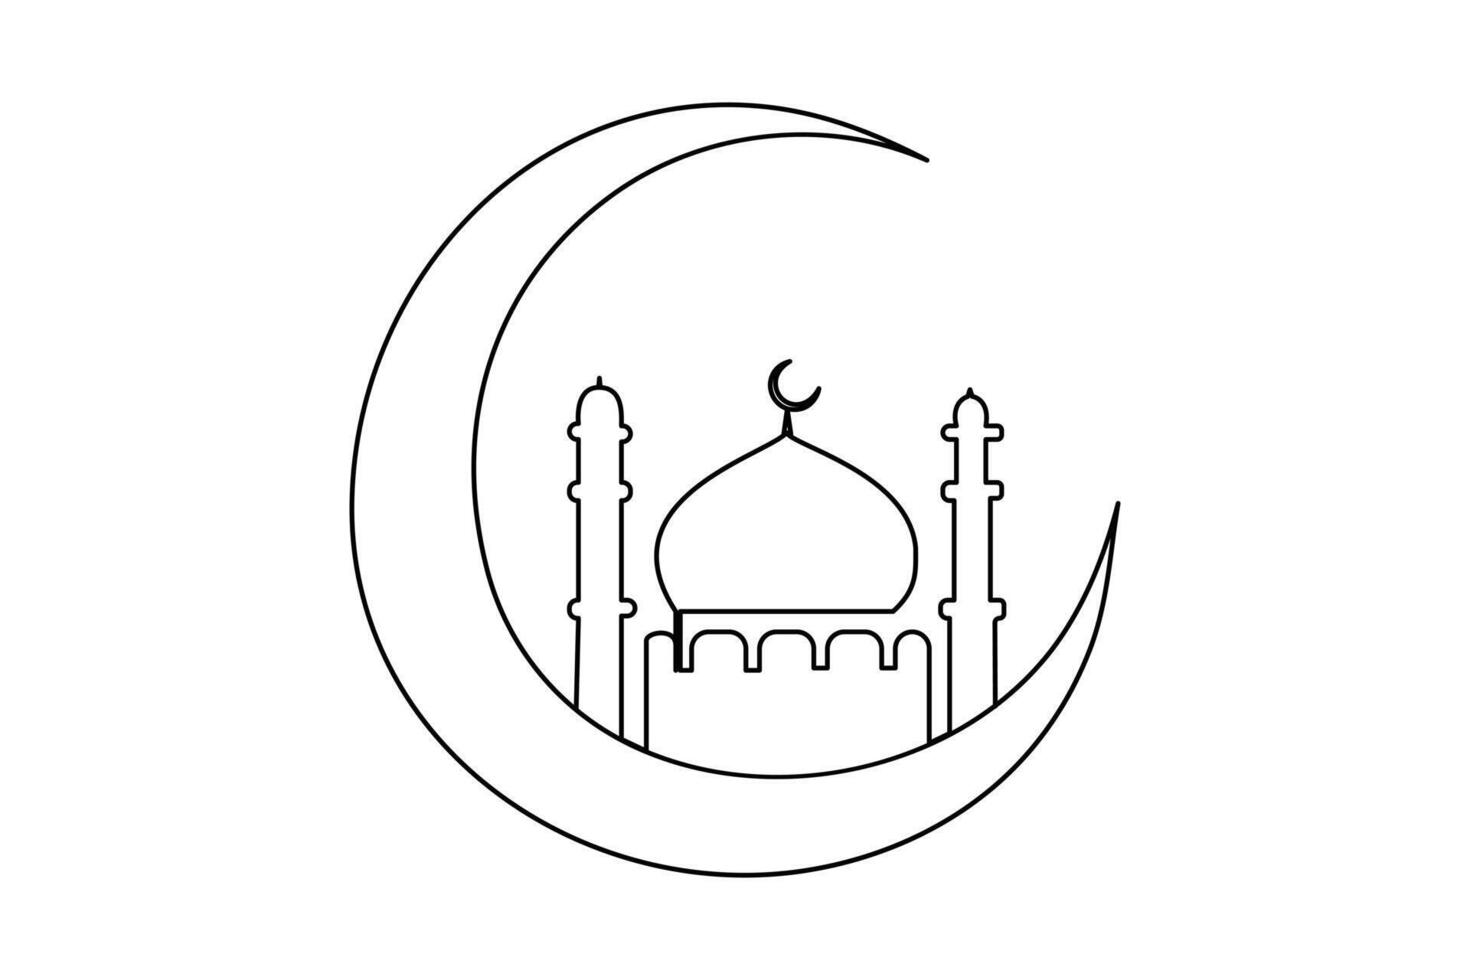 continu un ligne Ramadan symbole. mosquée, eid Moubarak, eid fitr vecteur ligne concept contour vecteur art illustration